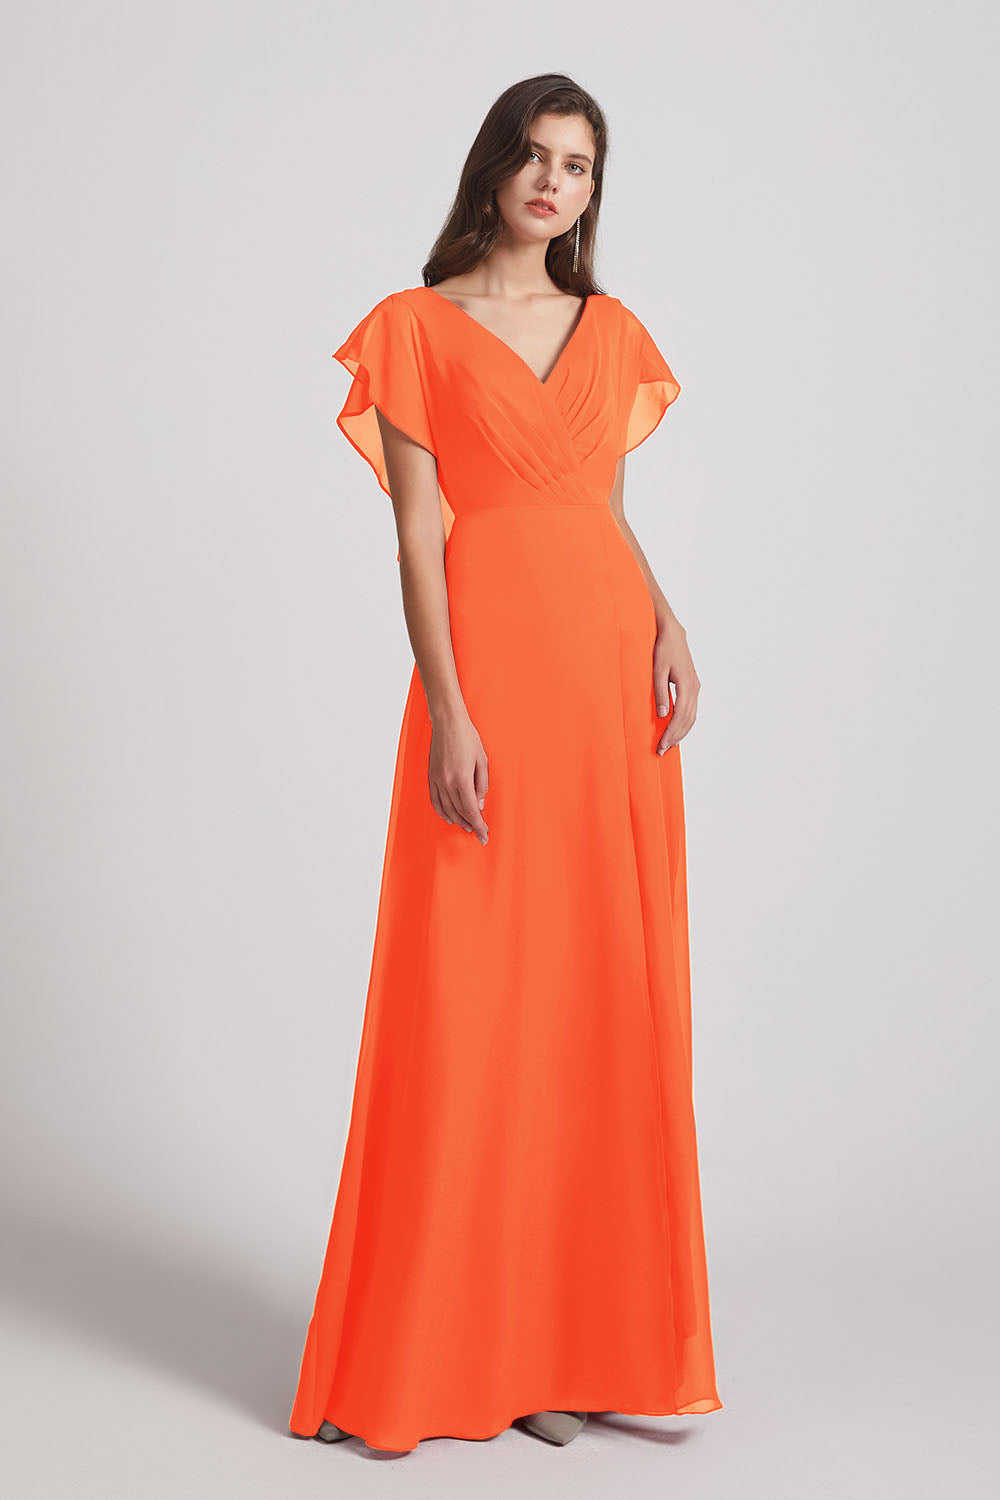 Alfa Bridal Tangerine Tango V-Neck Chiffon Long Backless Bridesmaid Dresses with Side Slit (AF0071)